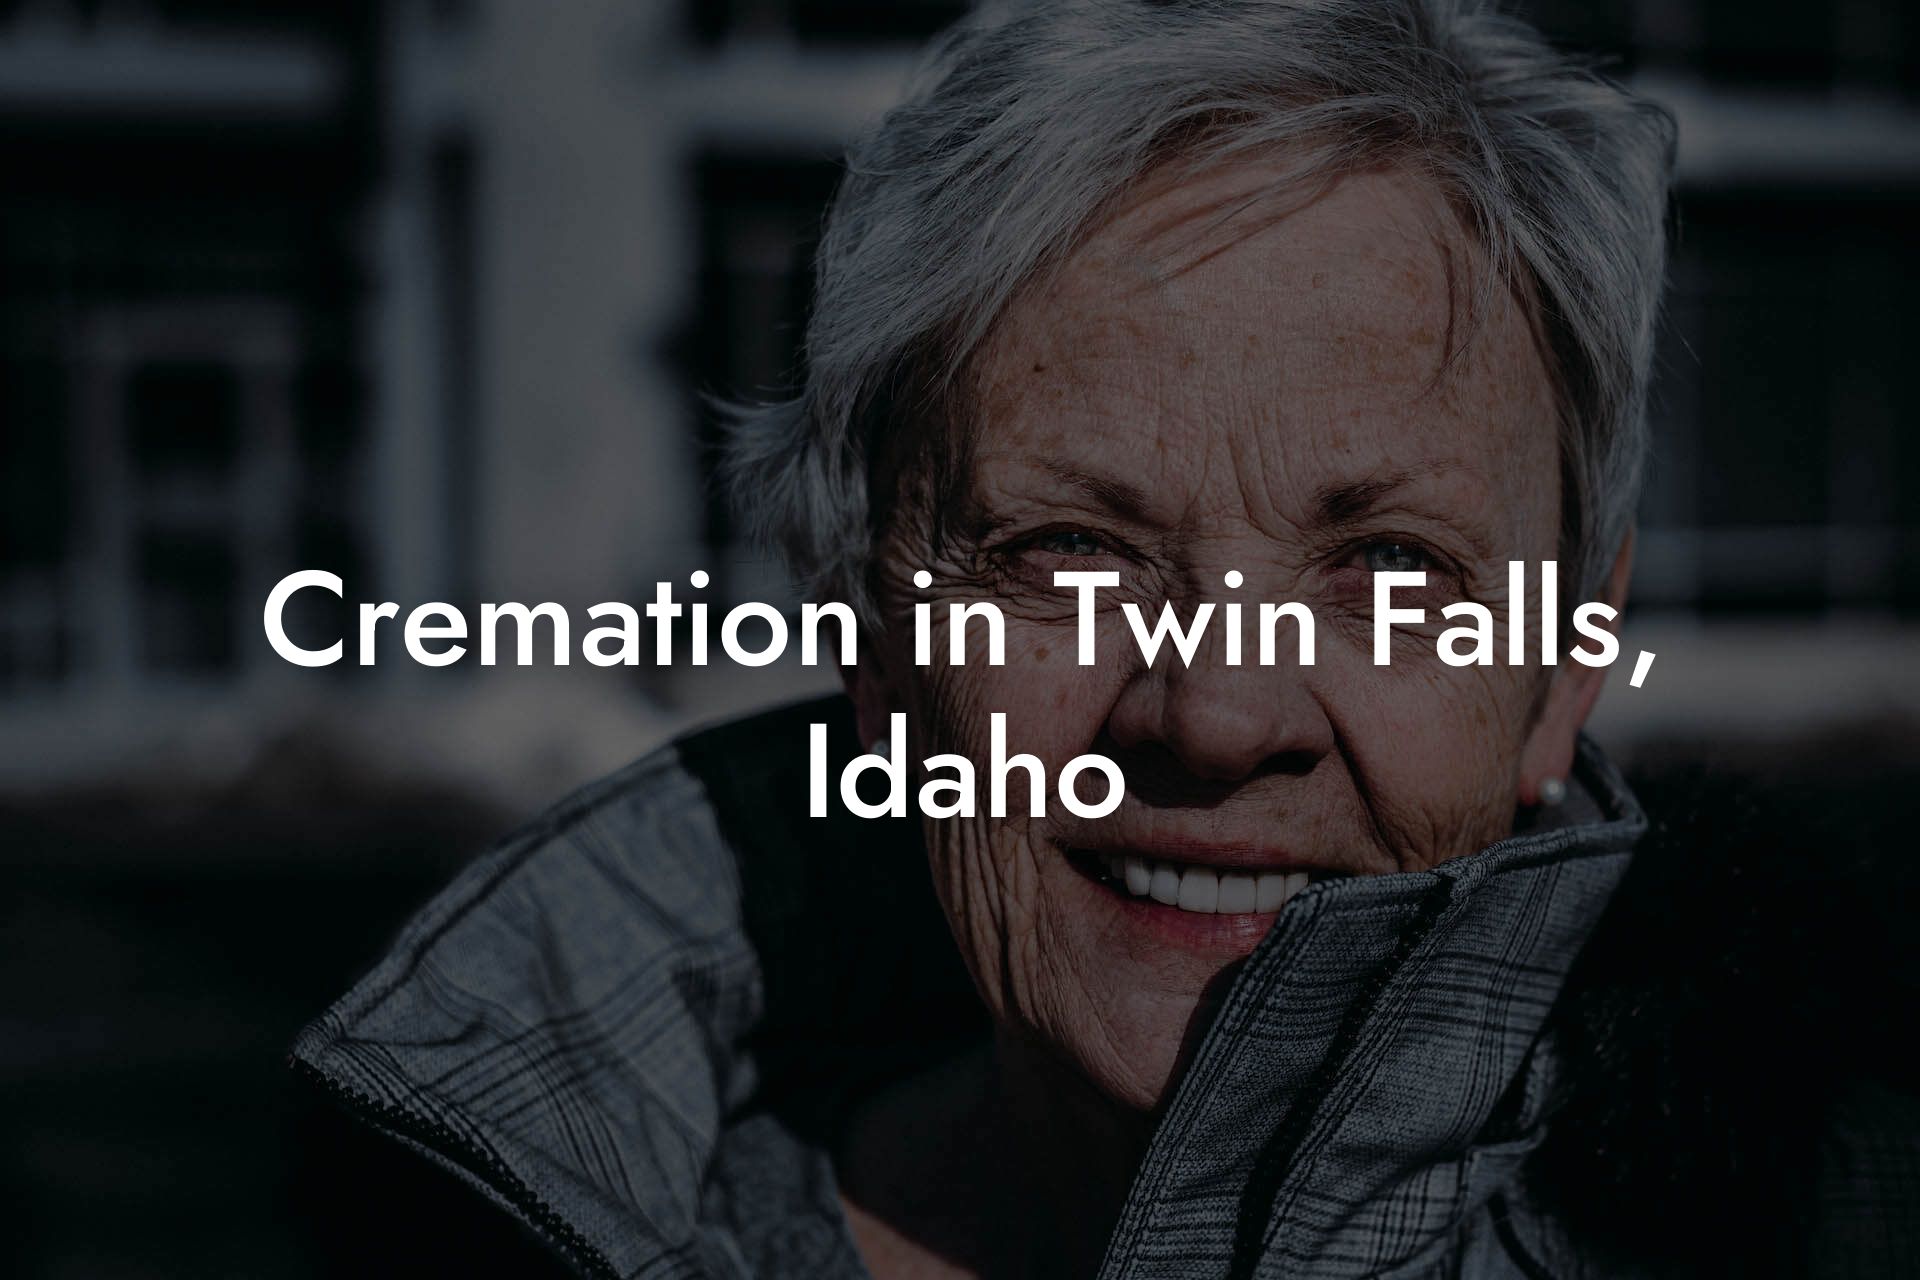 Cremation in Twin Falls, Idaho